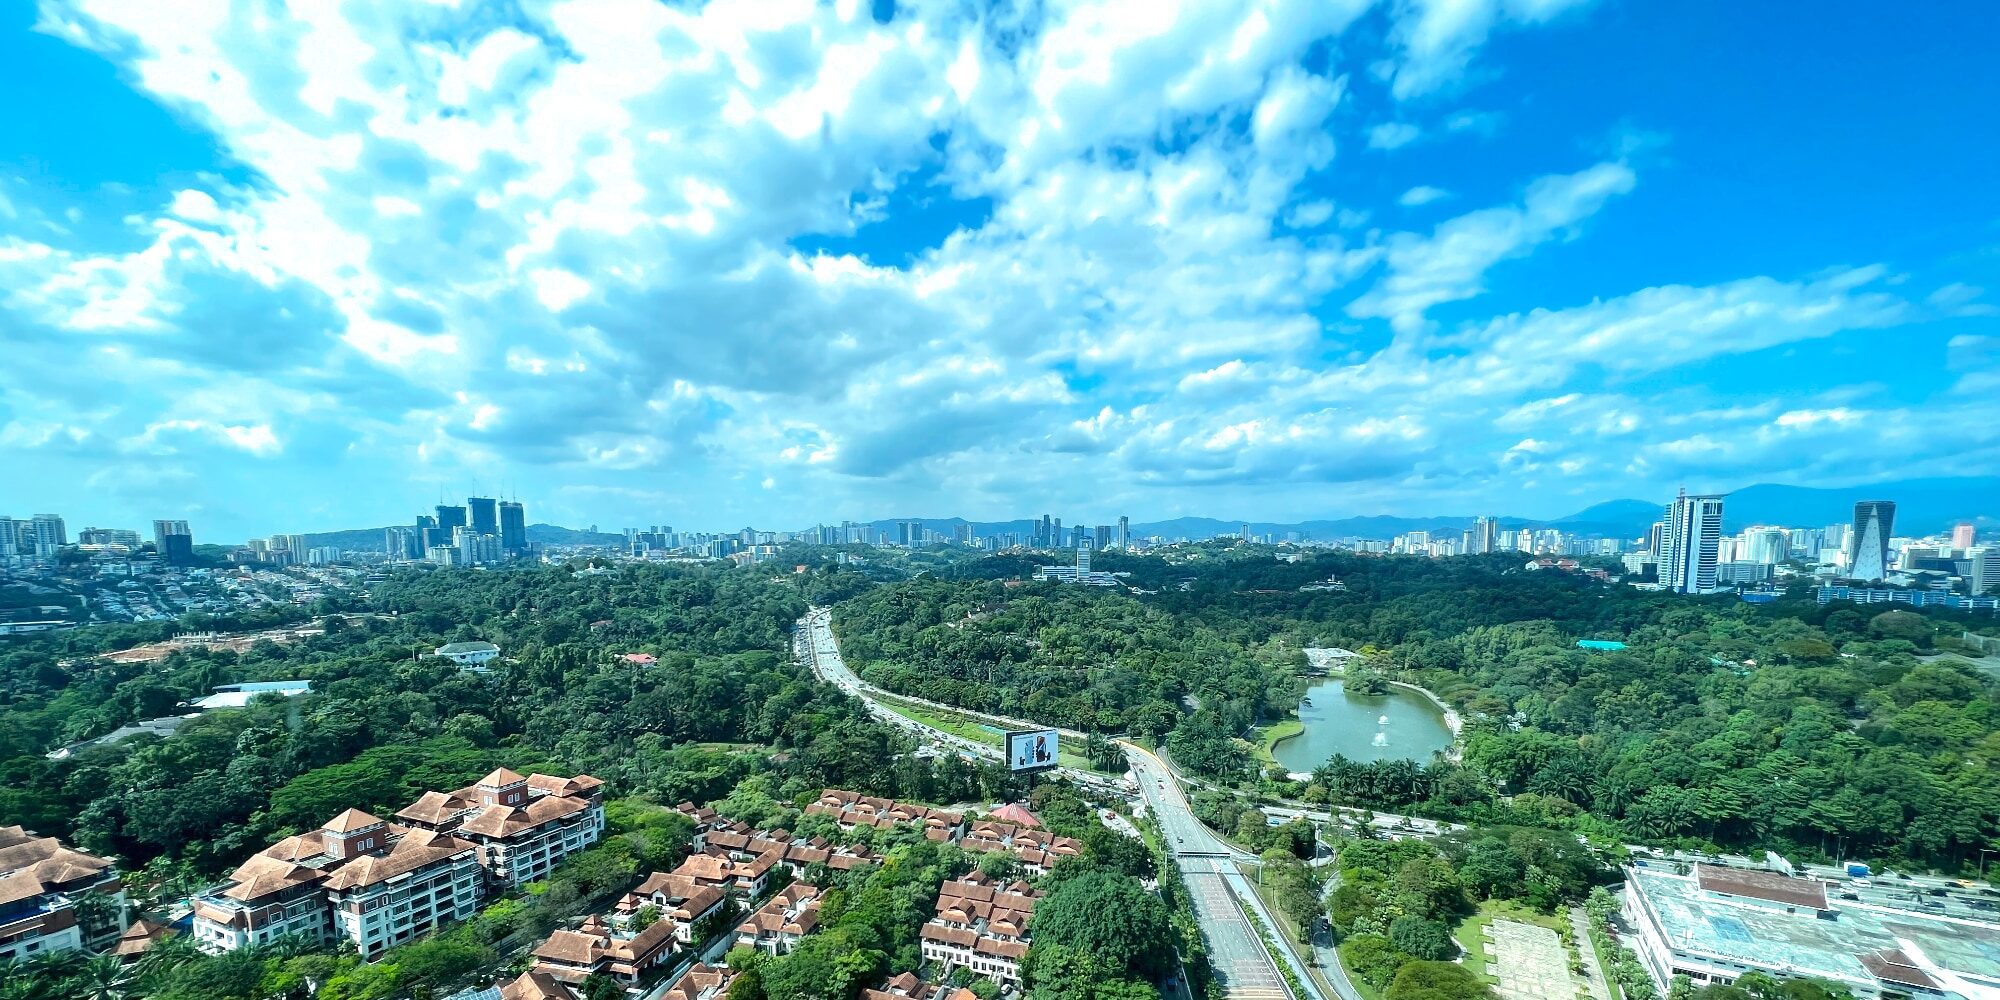 “Truly Asia” Pt 1: Kuala Lumpur